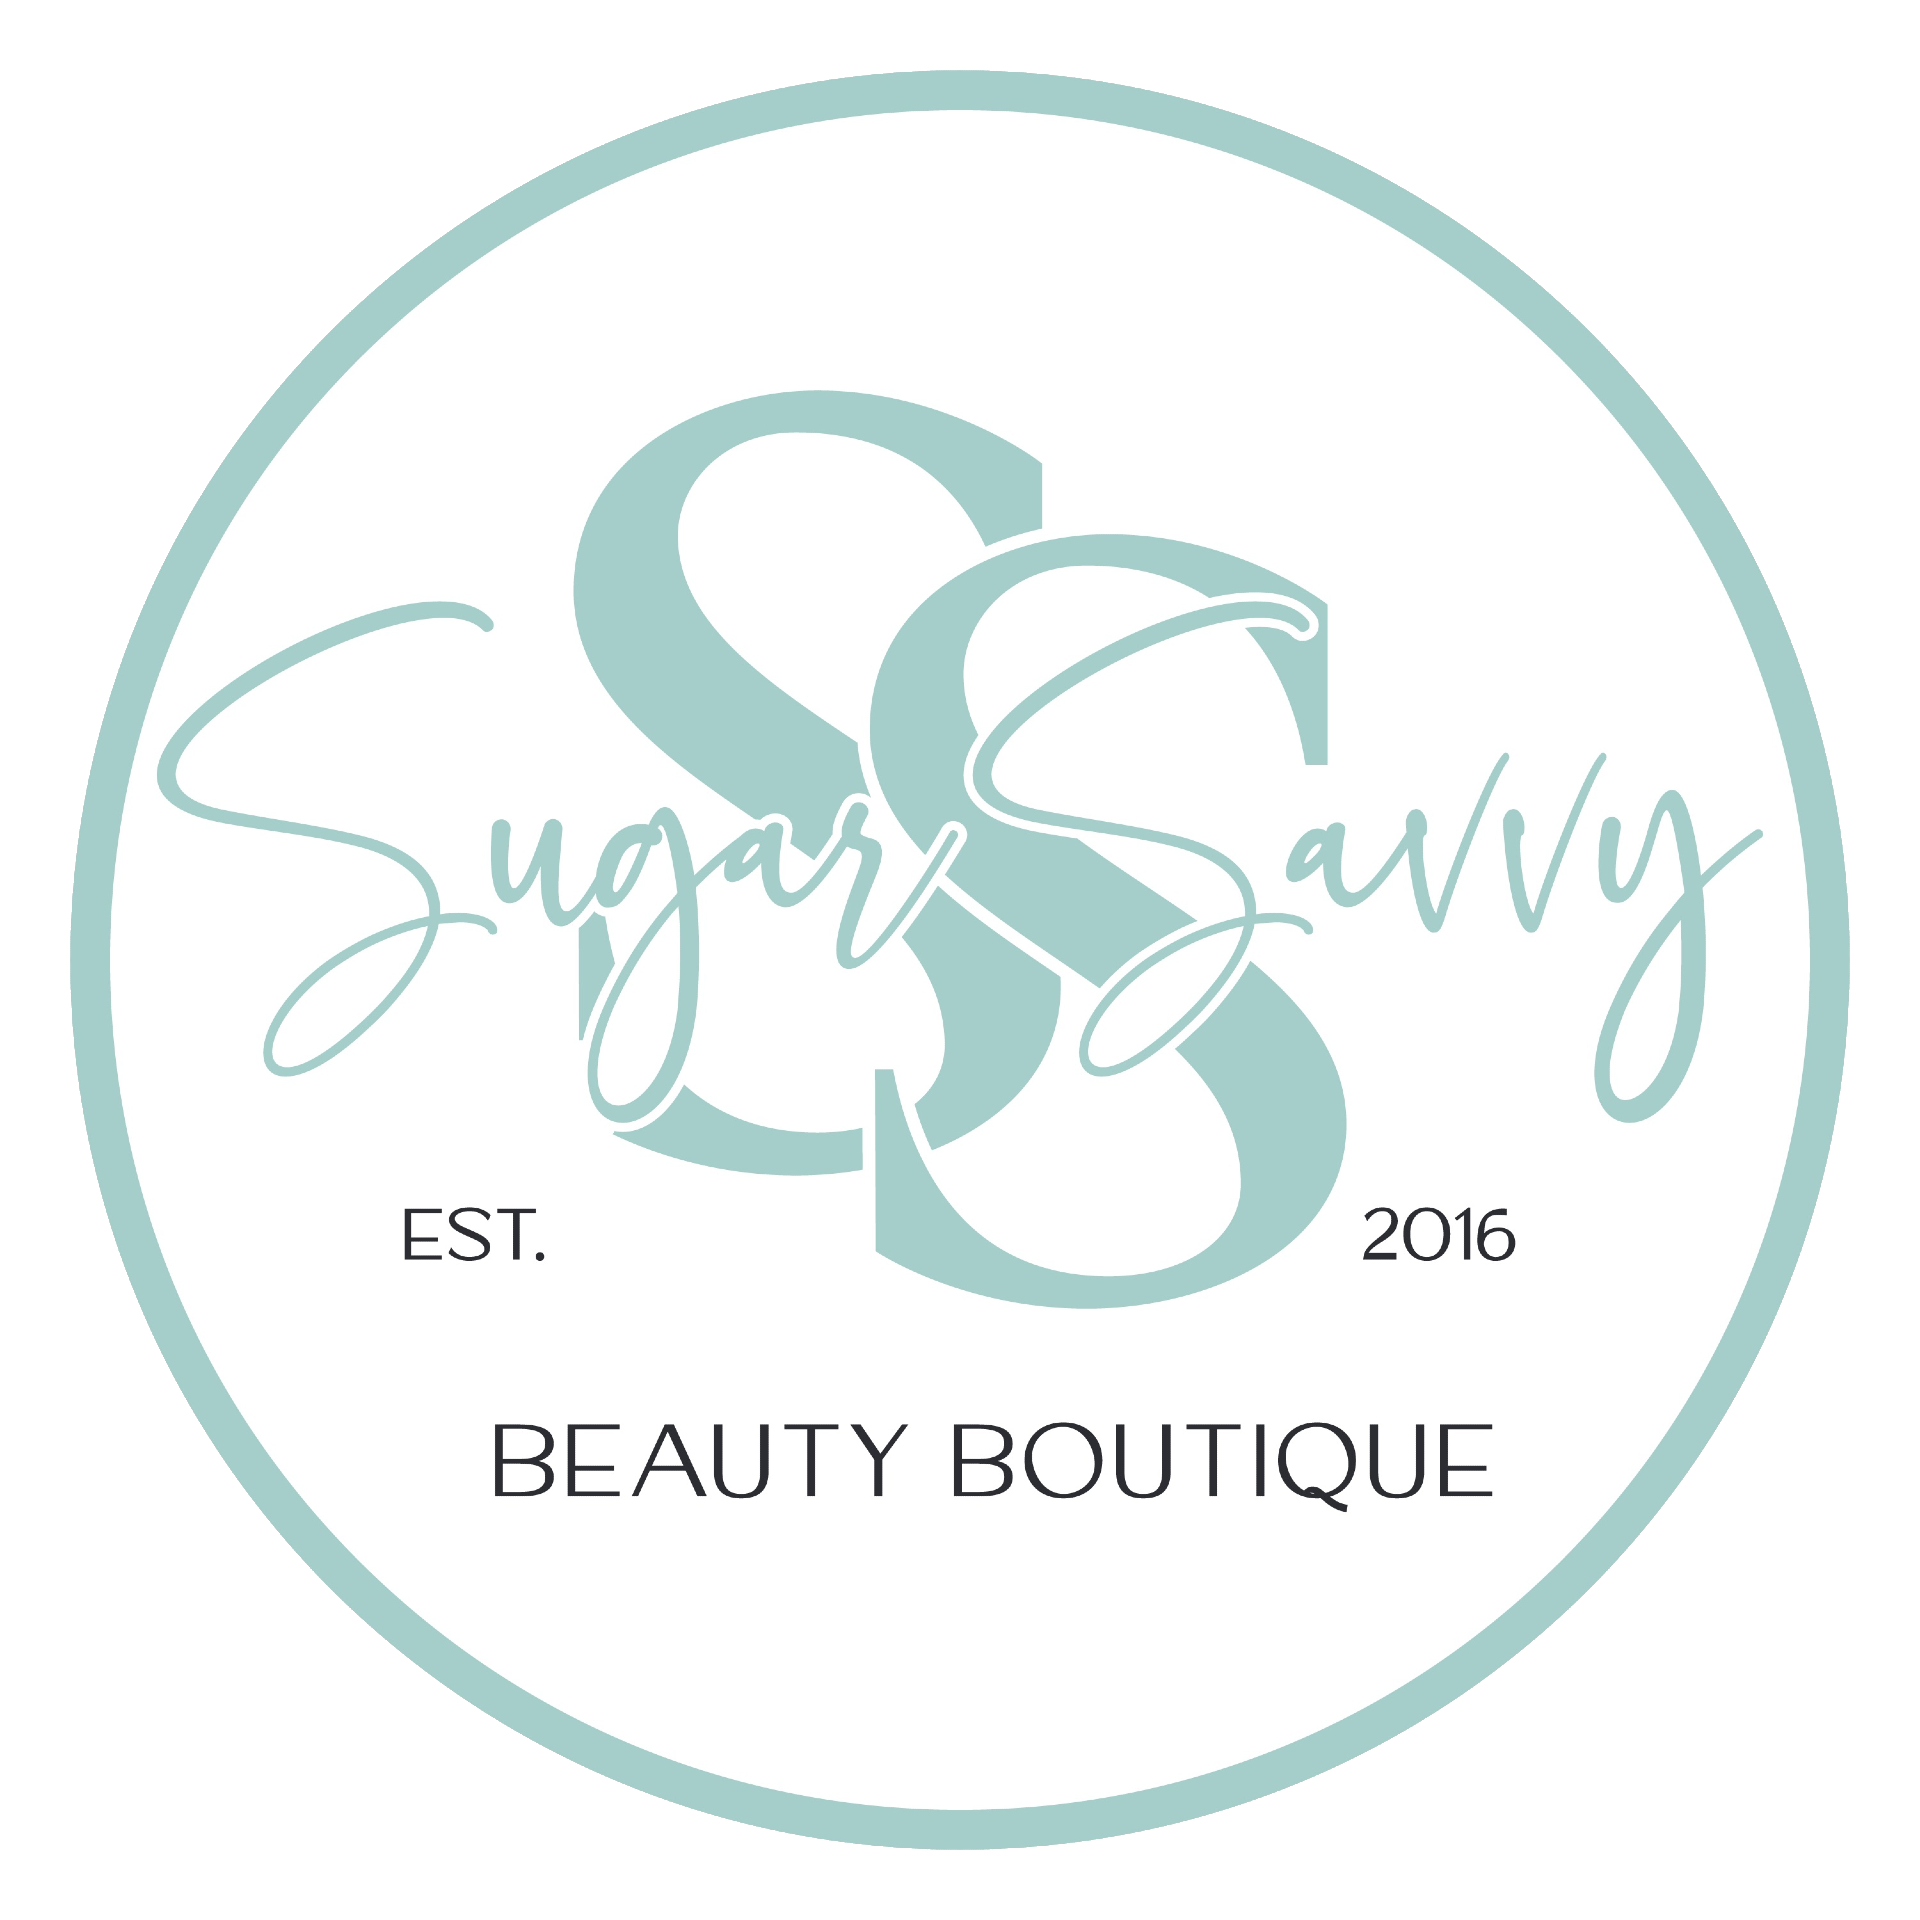 Sugar Savvy Beauty Boutique